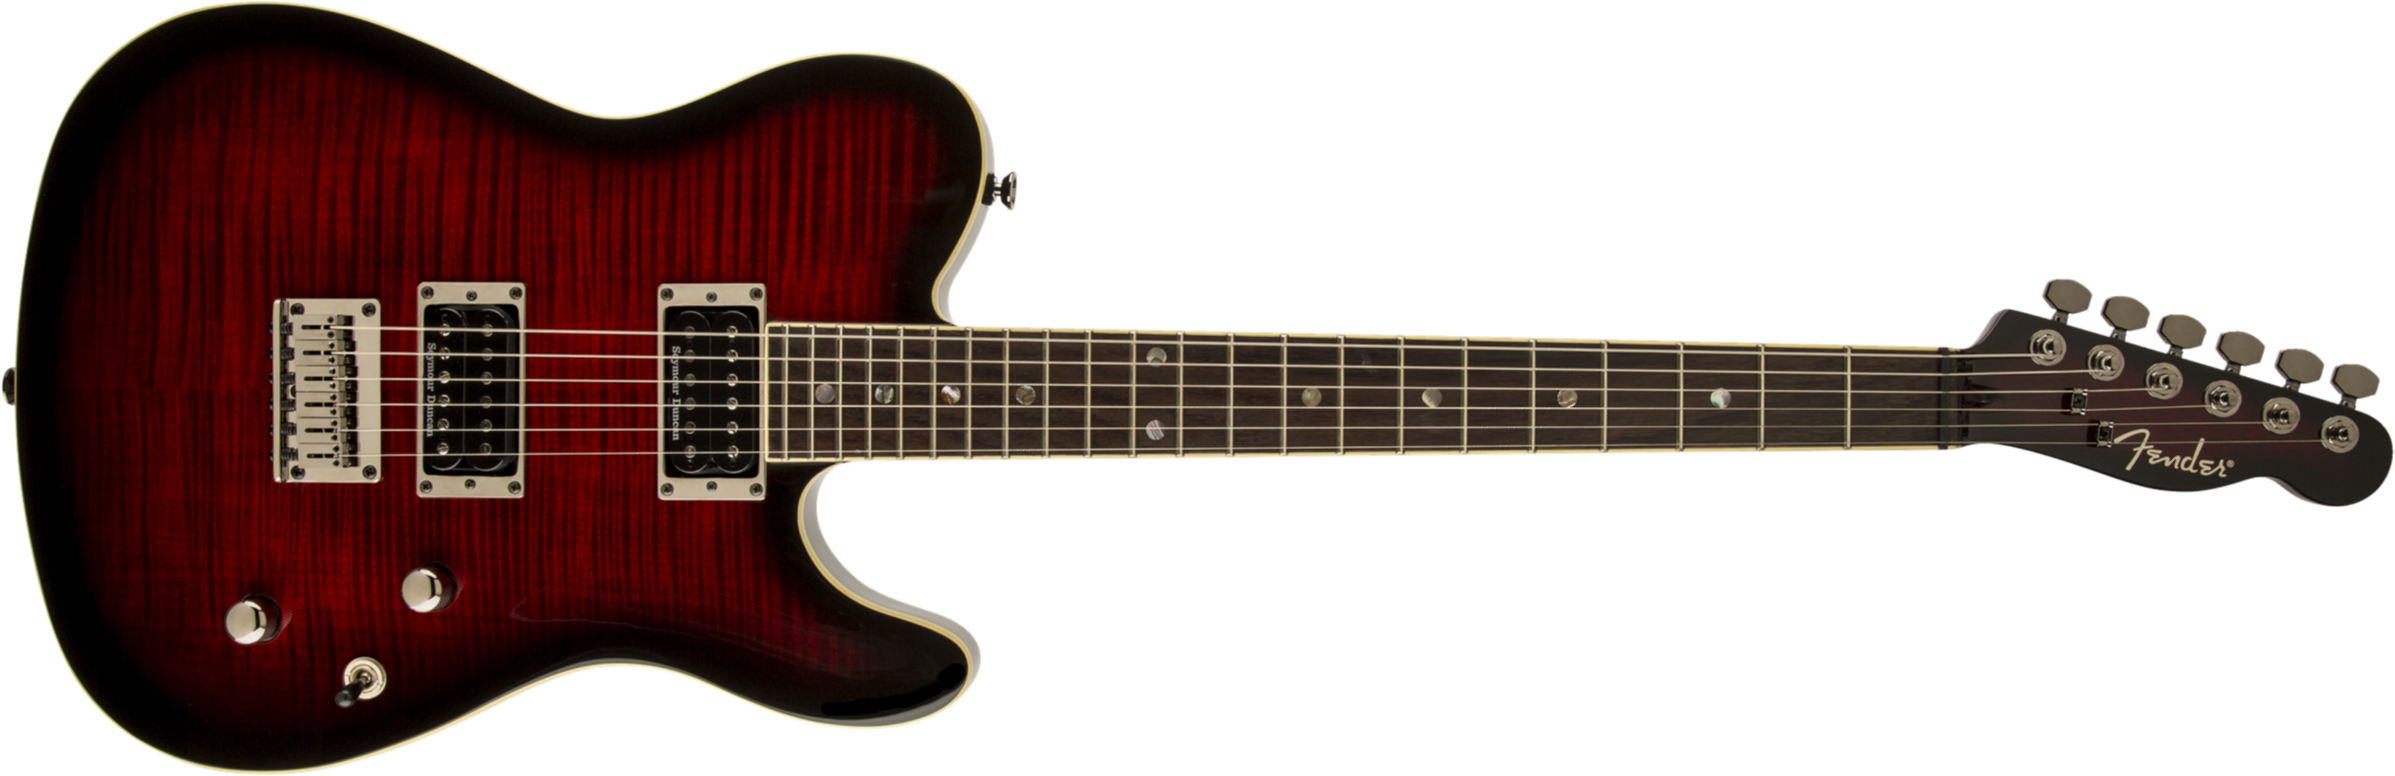 Fender Telecaster Korean Special Edition Custom Fmt (lau) - Black Cherry Burst - Televorm elektrische gitaar - Main picture